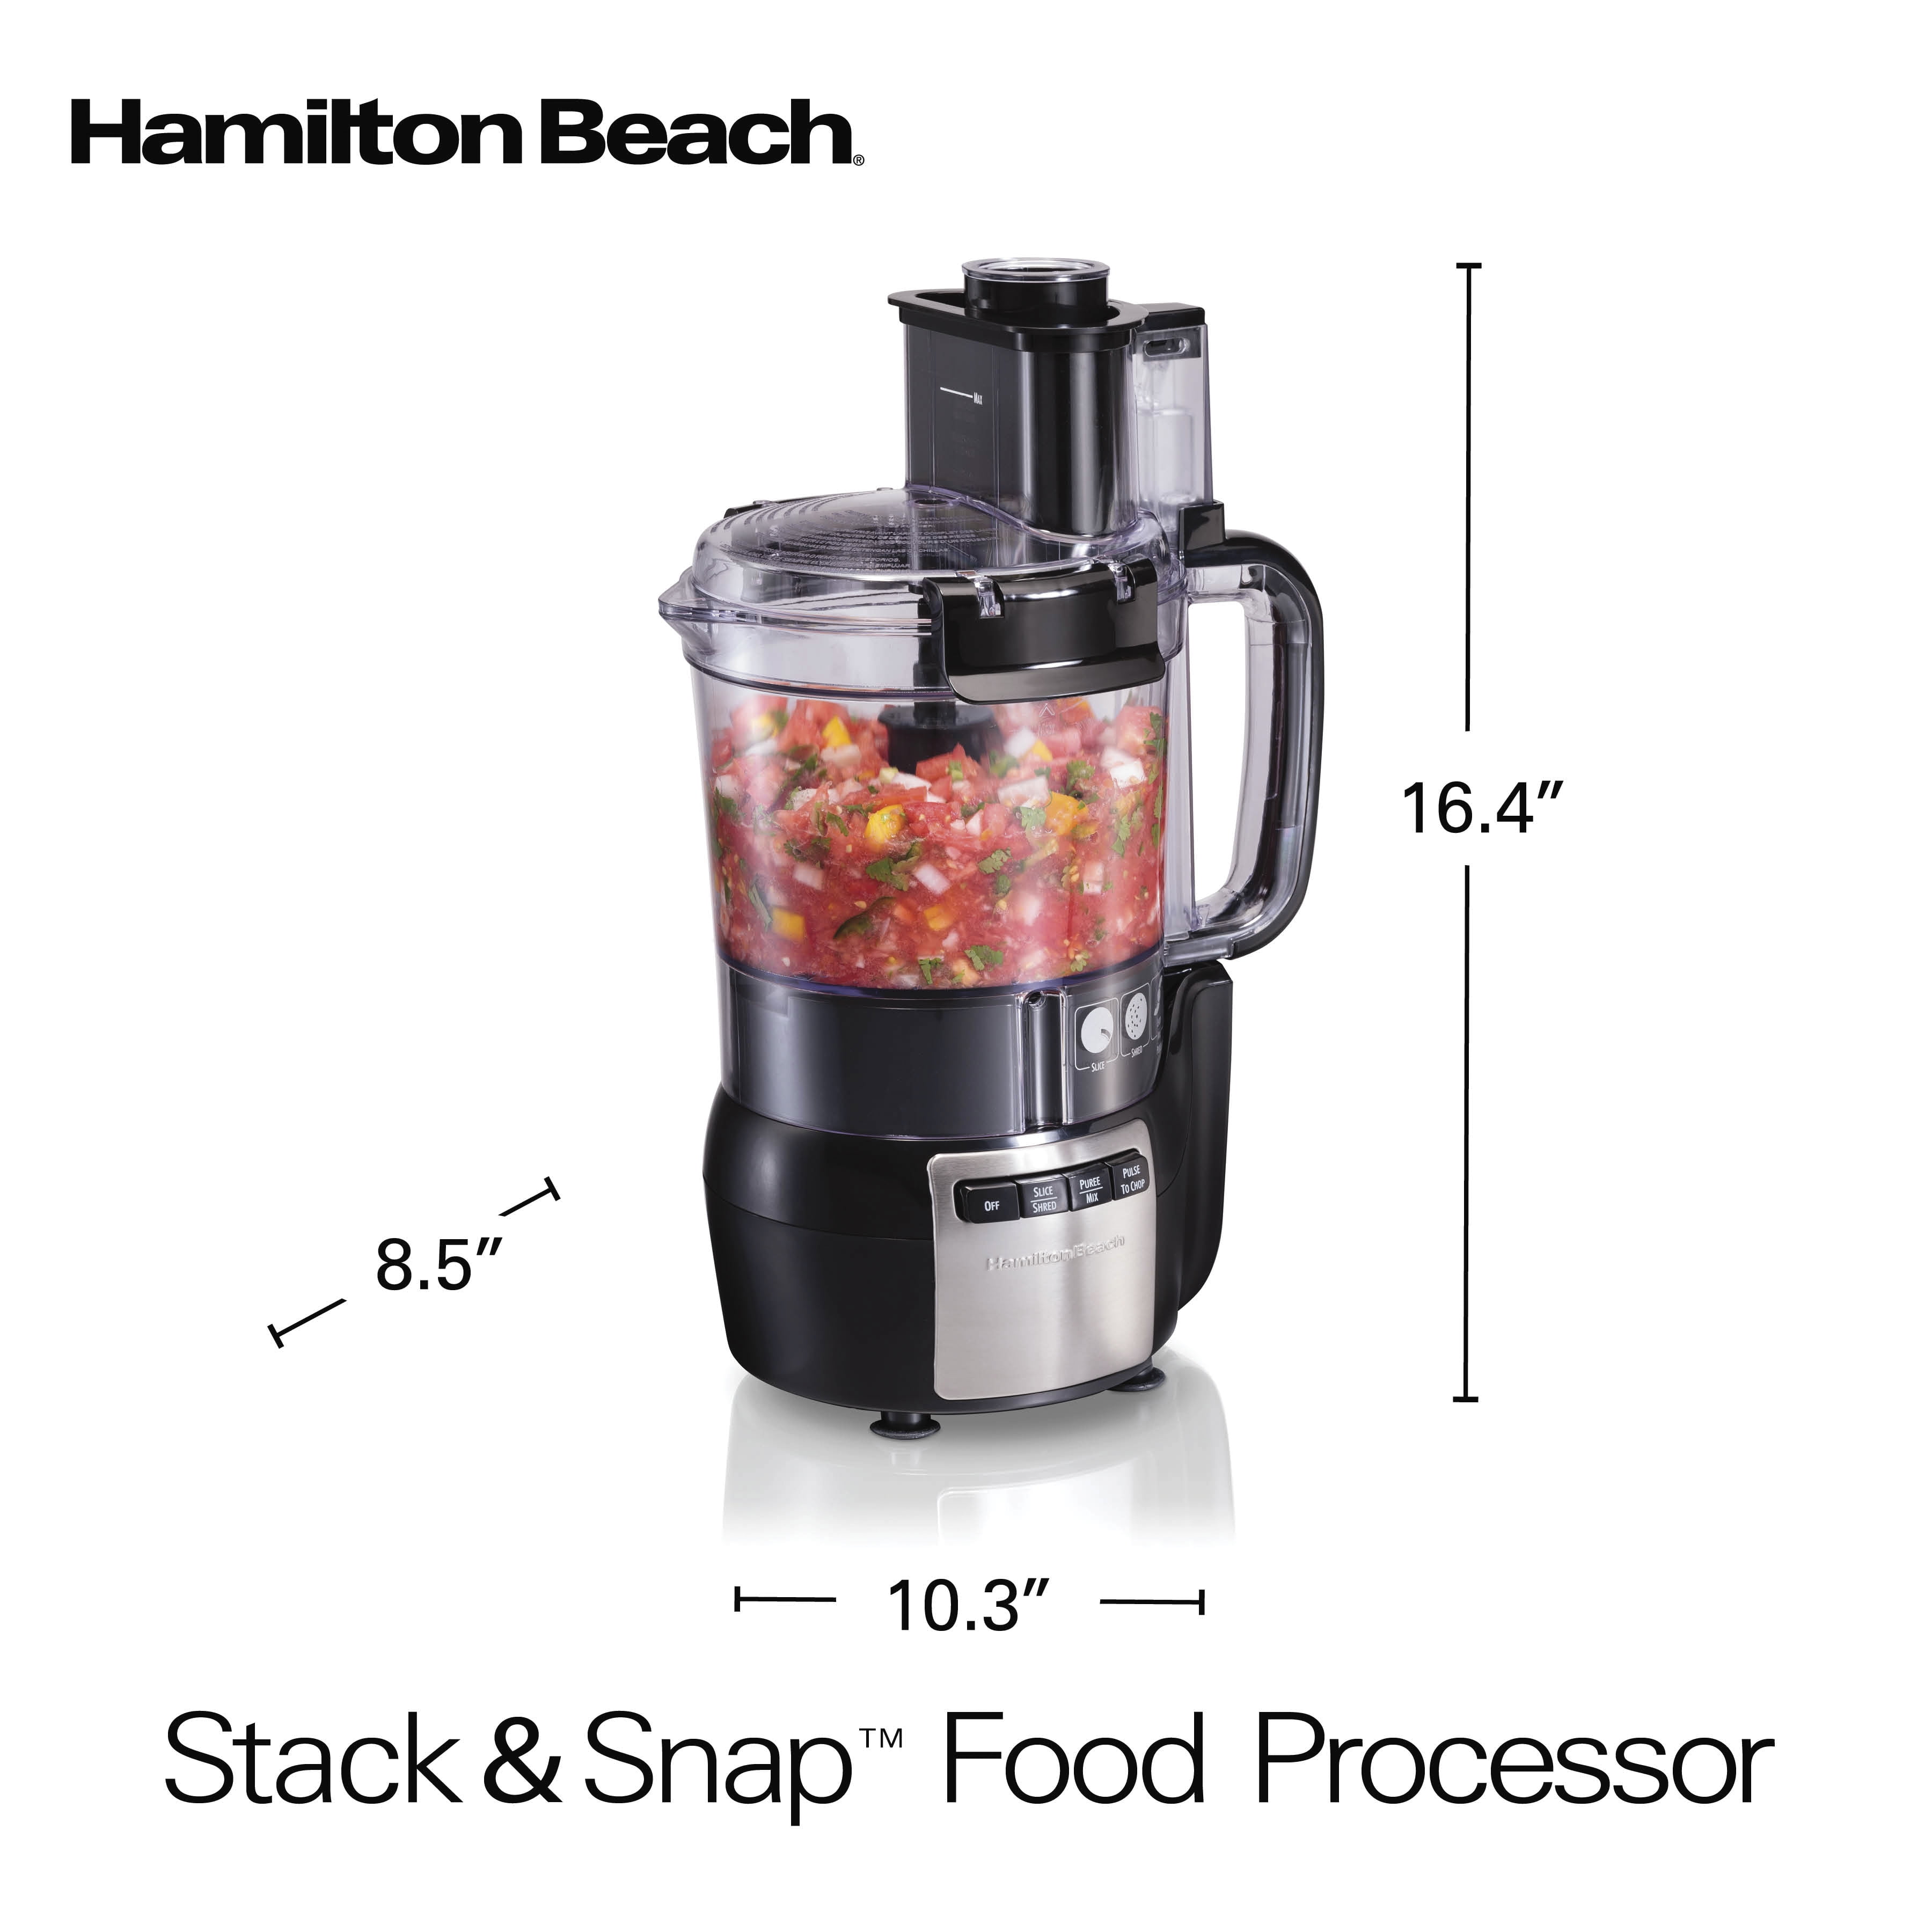 Hamilton Beach Stack & Snap 4-Cup Mini Food Processor & Vegetable Chopper,  250 Watts, for Slicing, Shredding, and Puree, Black (70510)